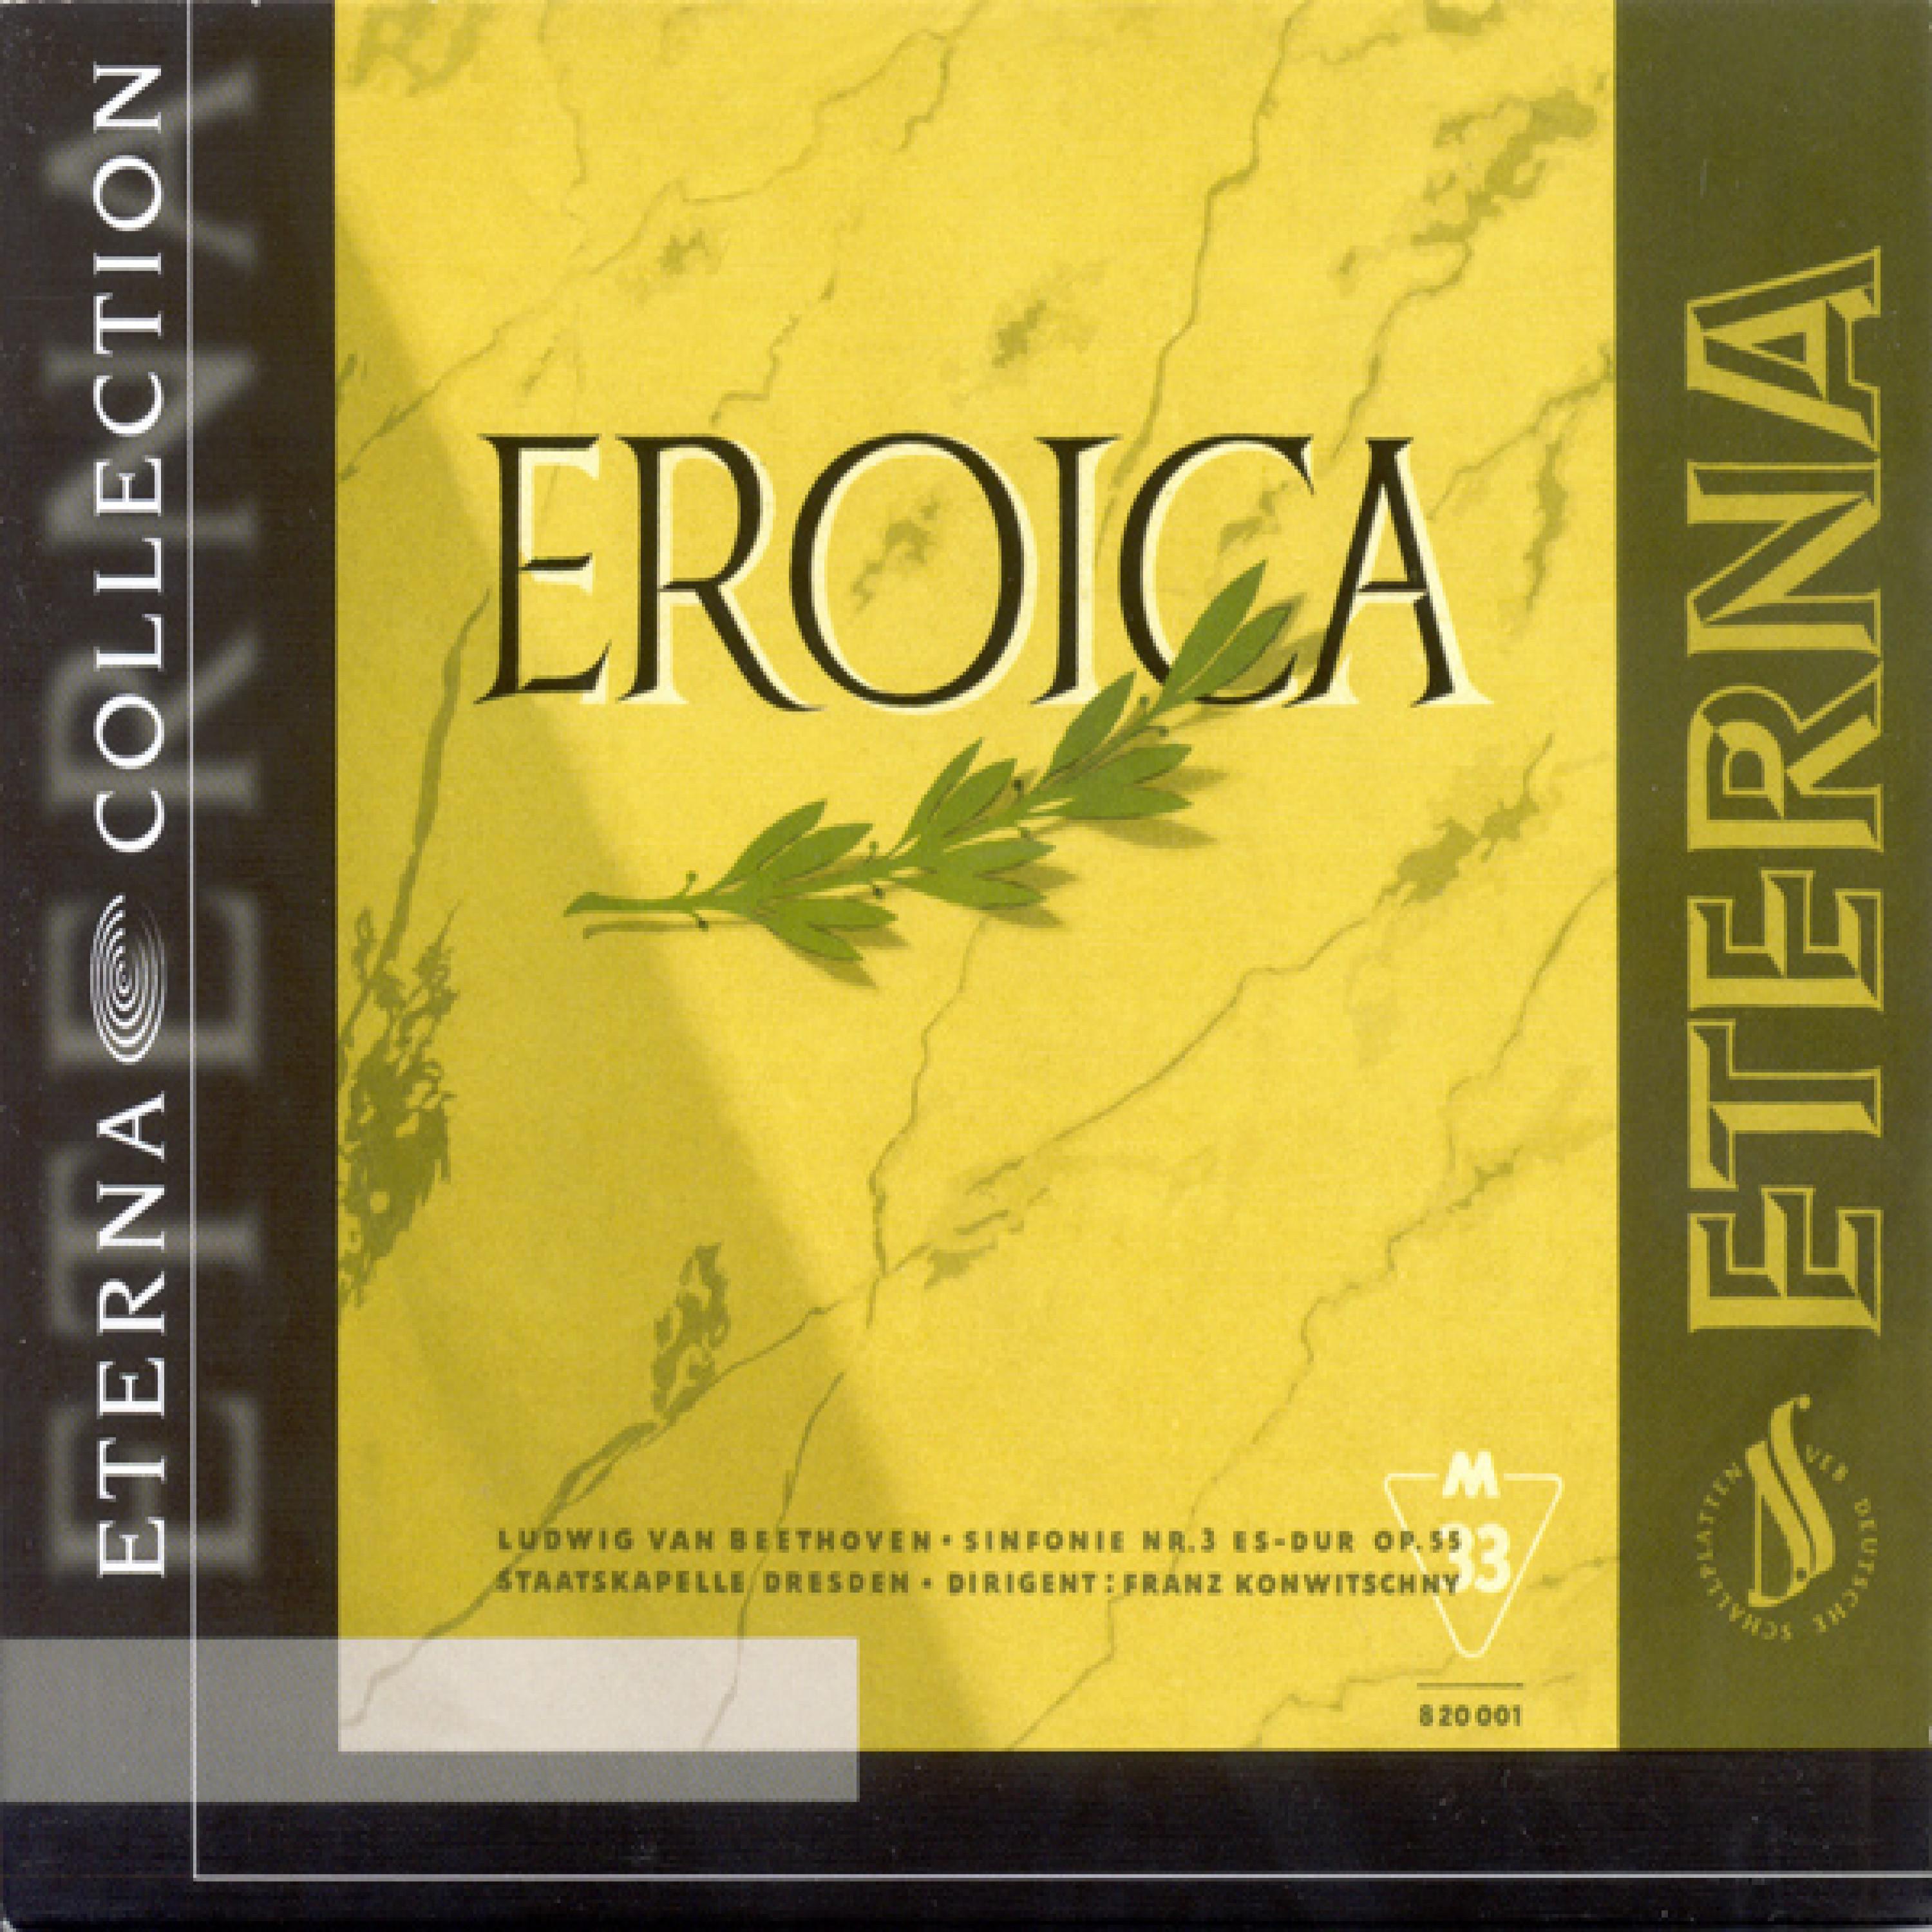 Symphony No. 3 in E flat major, Op. 55, "Eroica": I. Allegro con brio